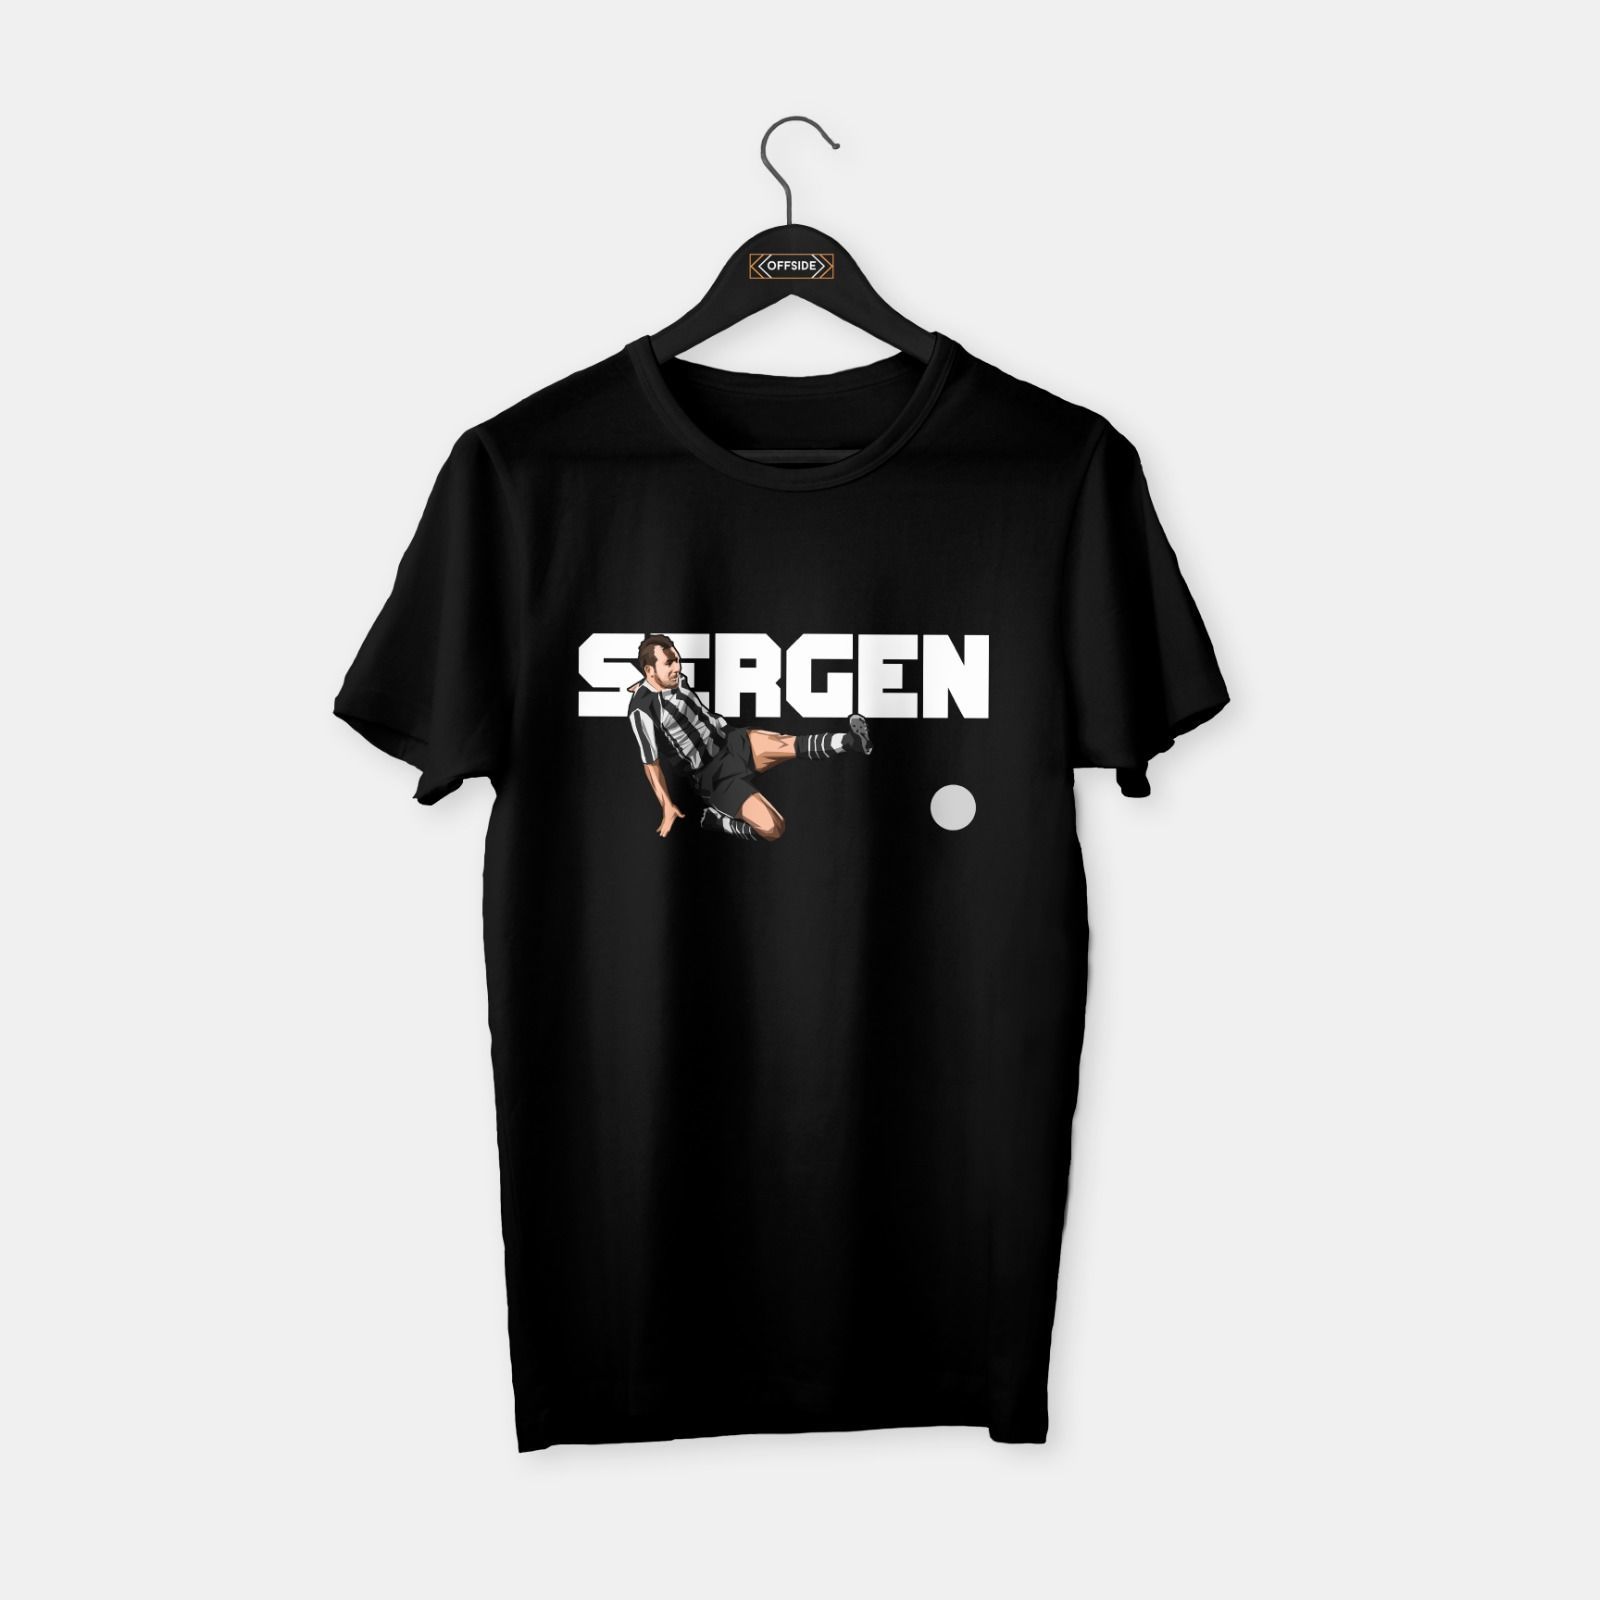 Sergen Illustration II T-shirt